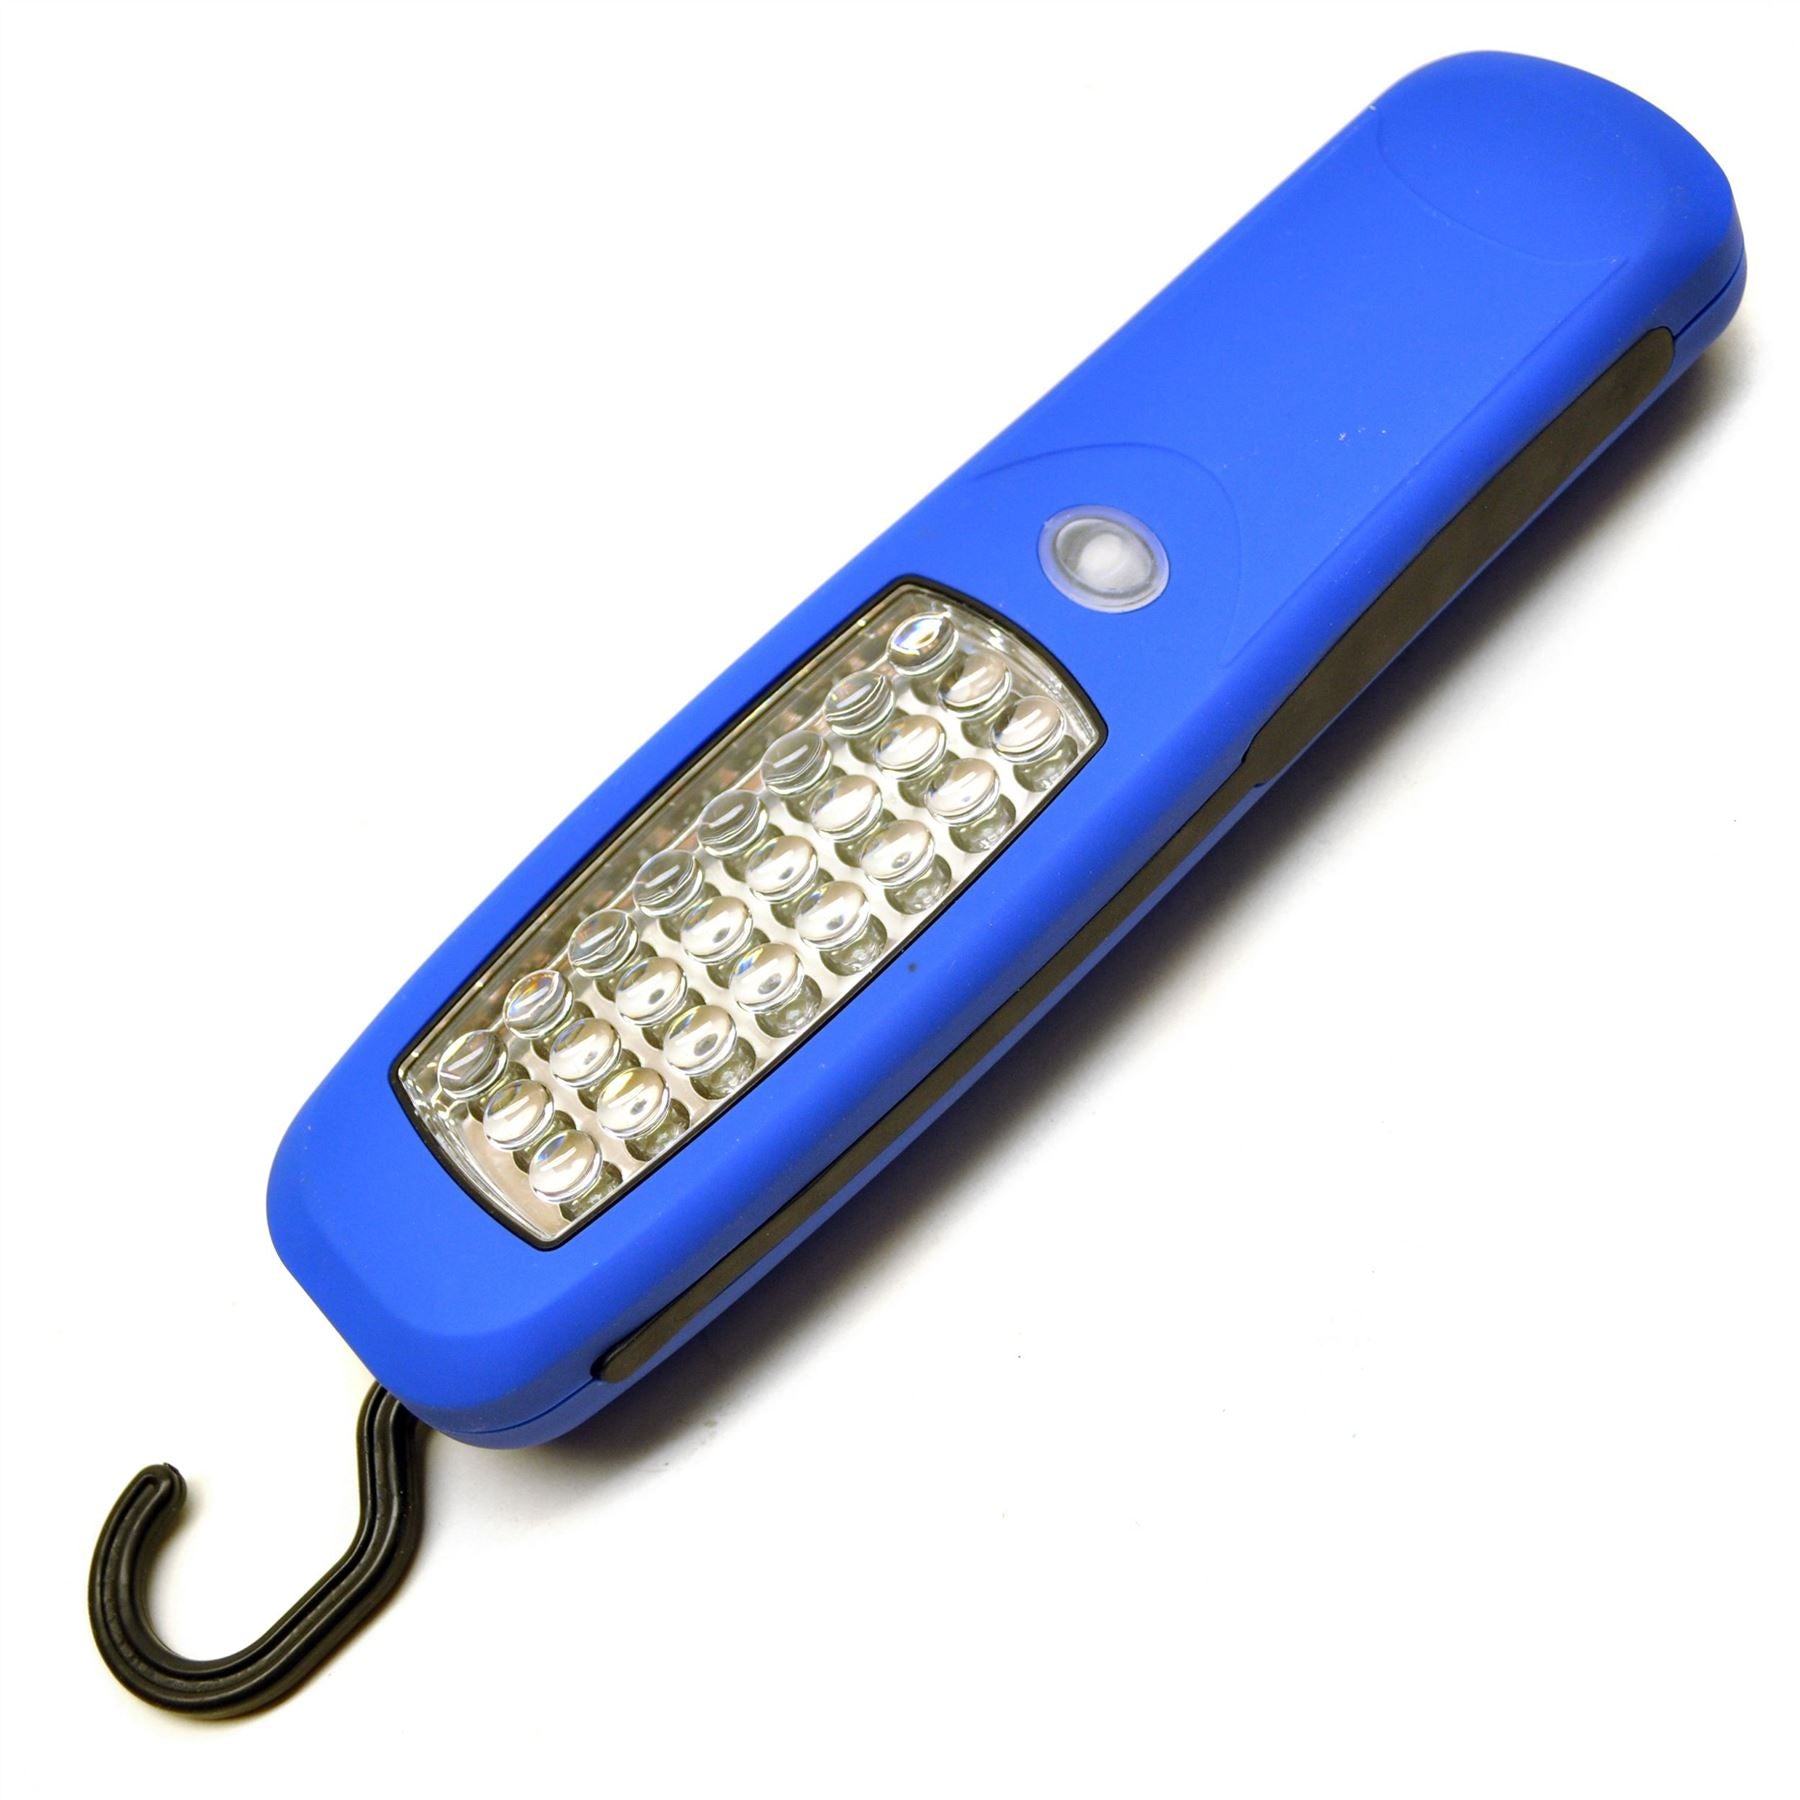 24 LED Work Light / Lead Light / Lamp Lantern Torch Cordless Flash Light  TE419